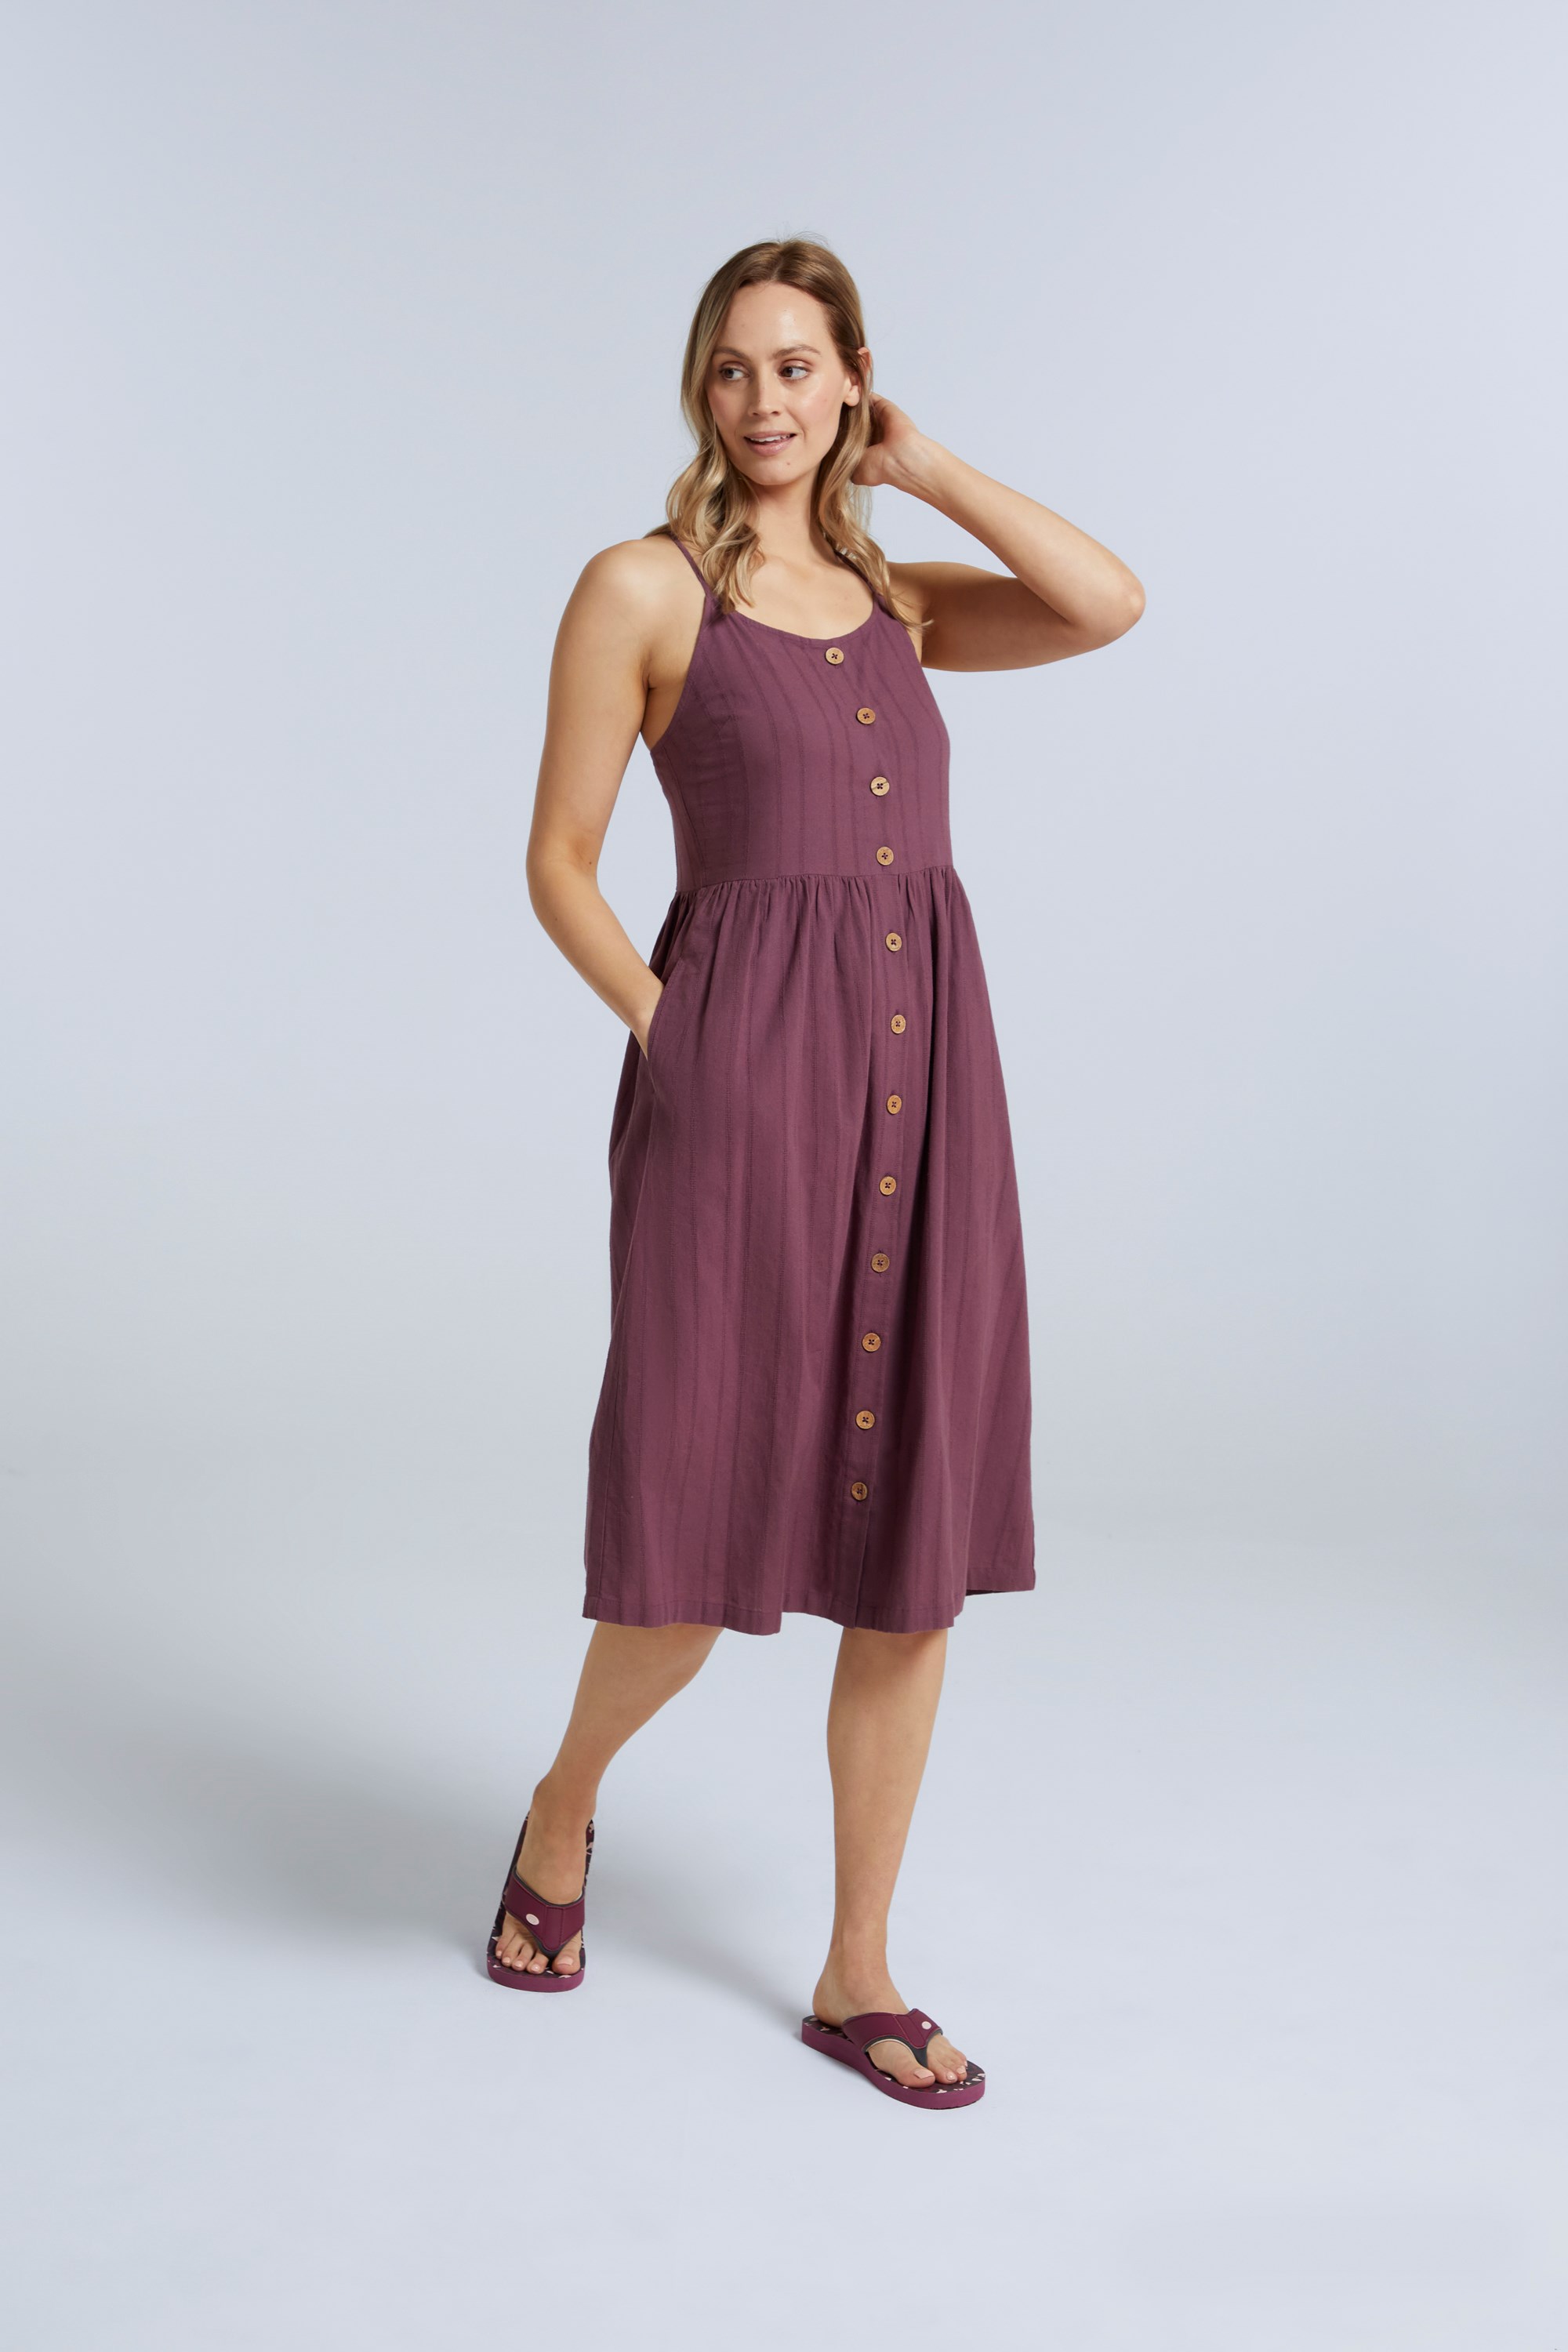 Amelia Womens Organic Dress - Burgundy